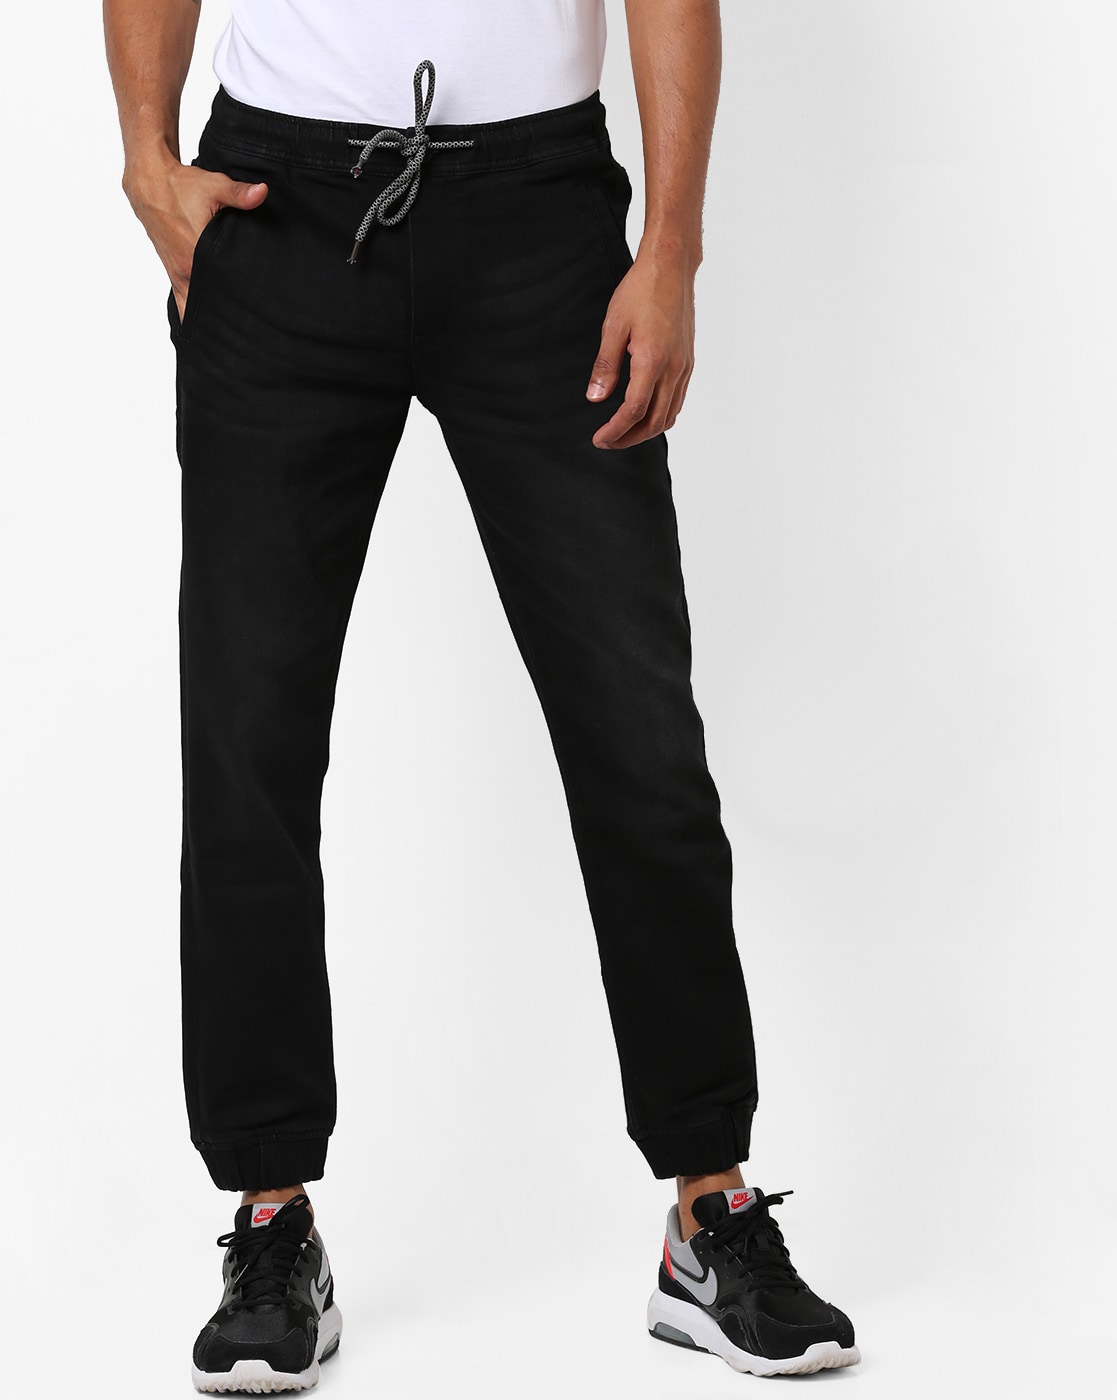 black jogger jeans